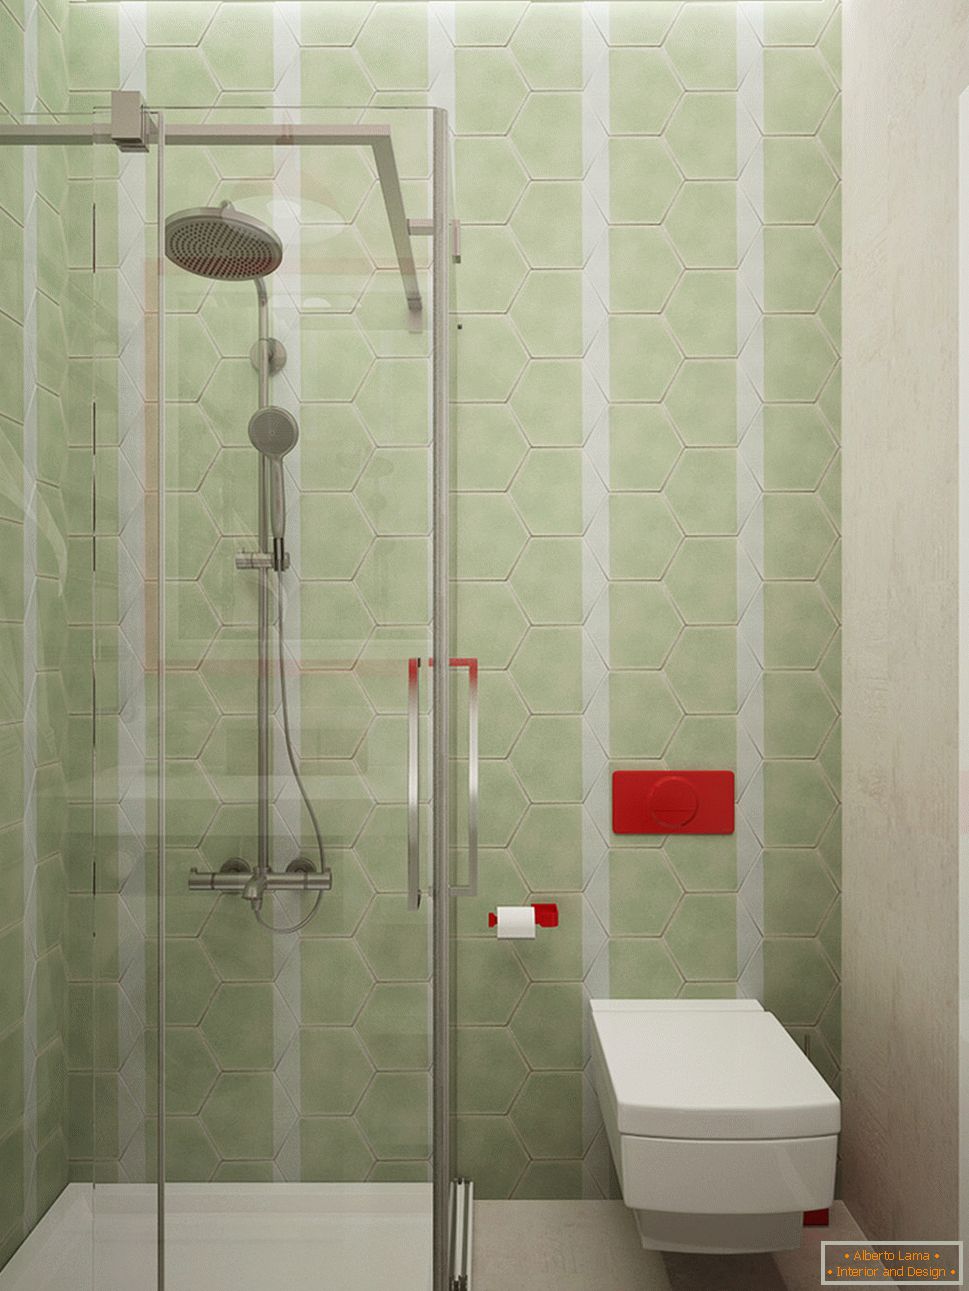 Bathroom design in light colors